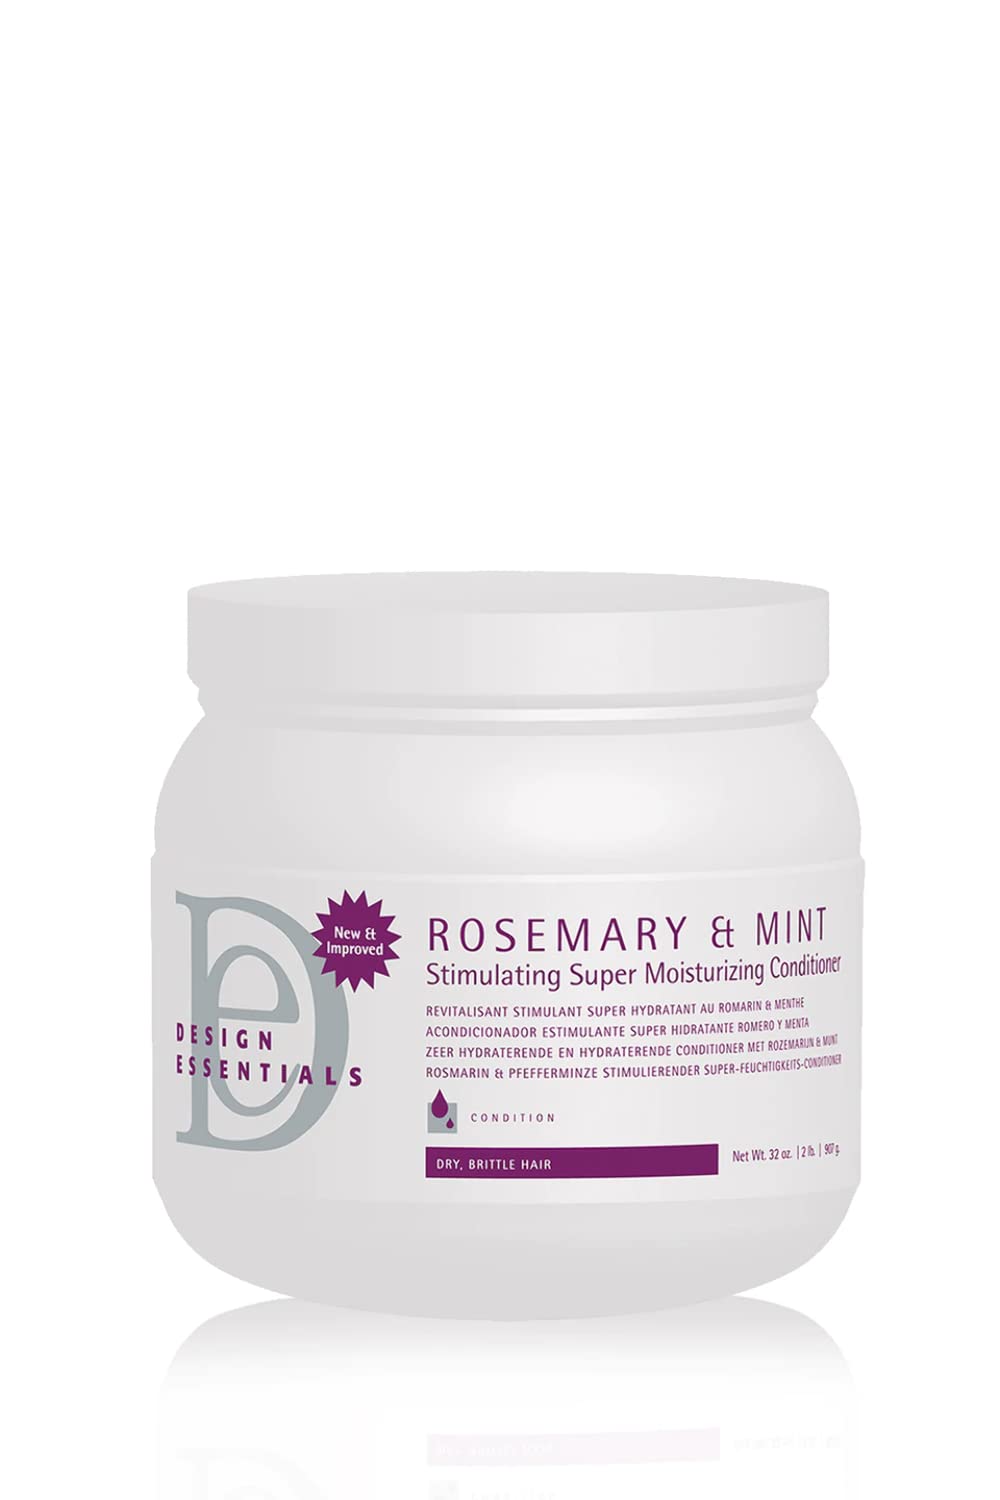 Design Essentials Rosemary & Mint Stimulating Super Moisturizing Conditioner for Dry, Brittle Hair, 11 Fl Oz.